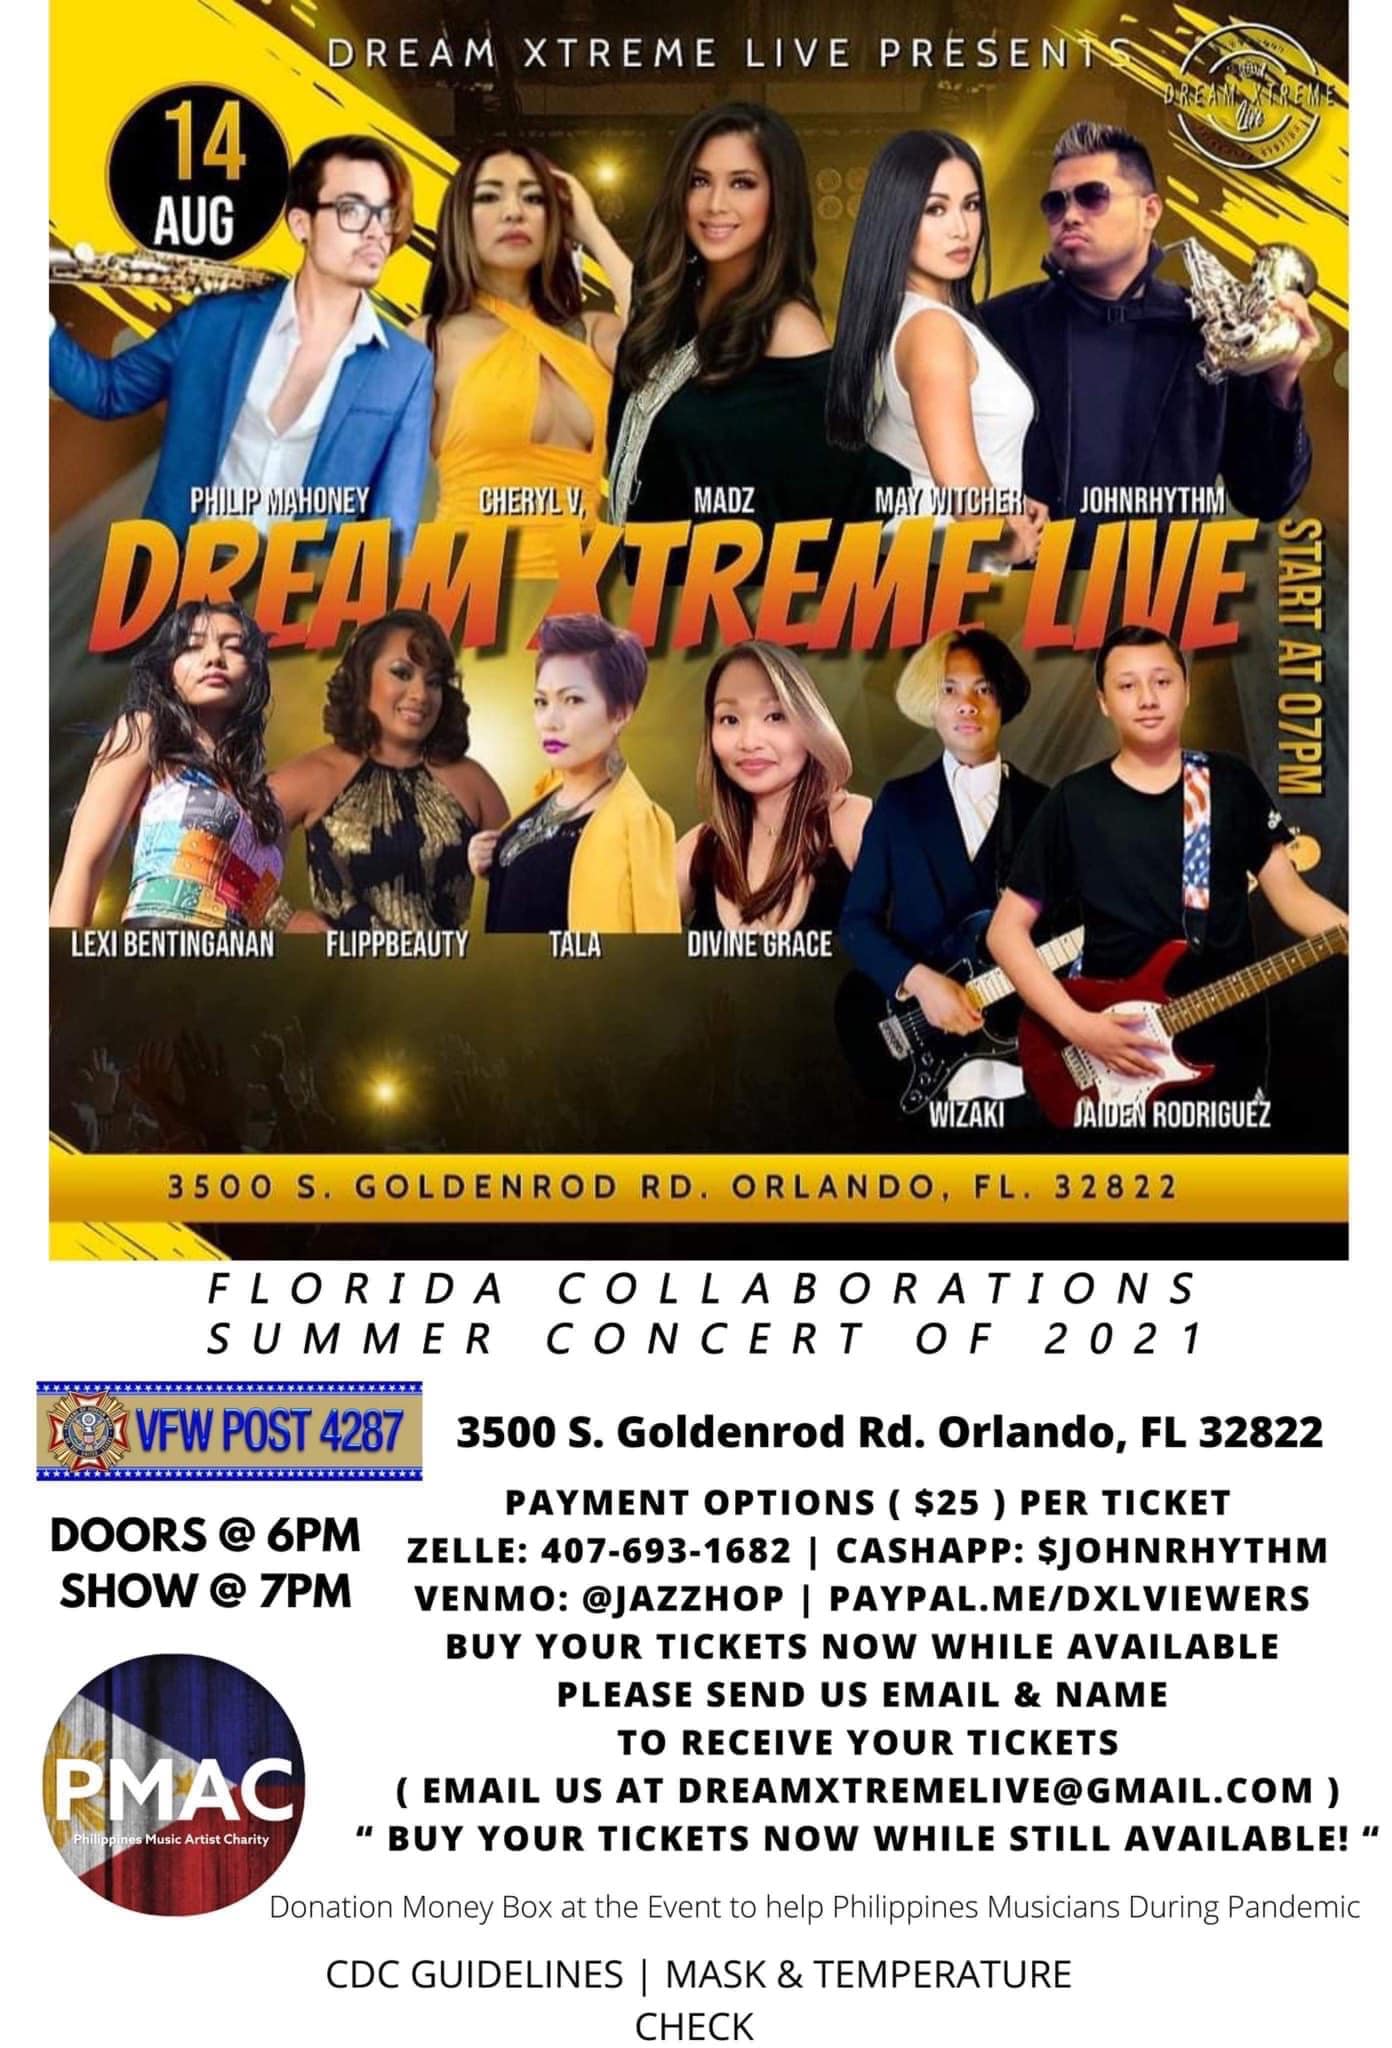 Dream Xtreme Live